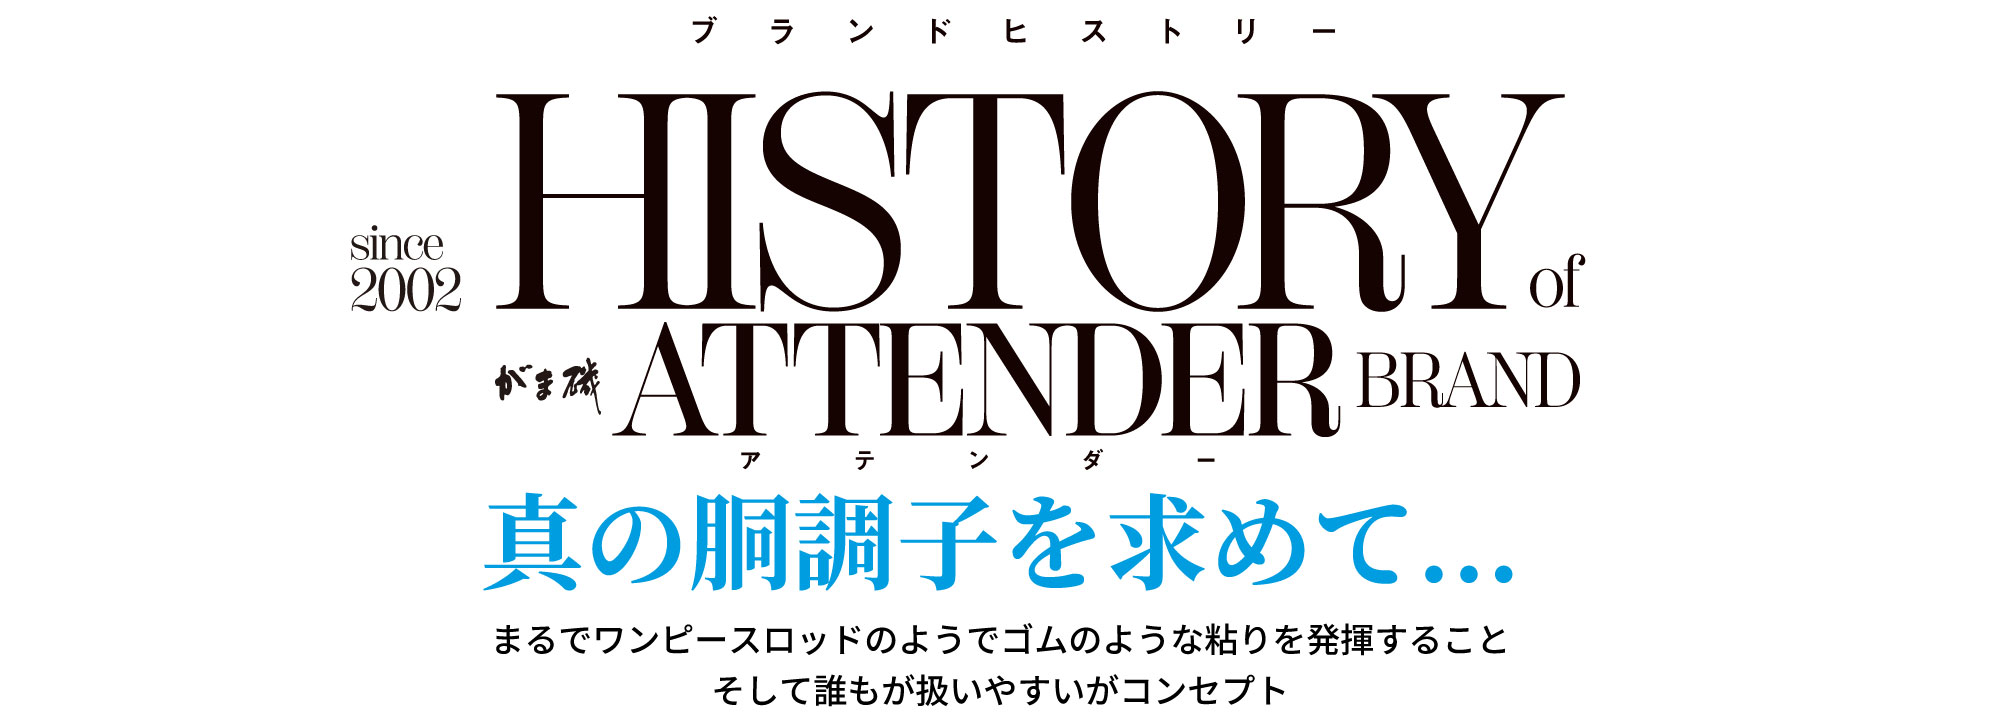 HISTORY of がま磯 ATTENDER BRAND